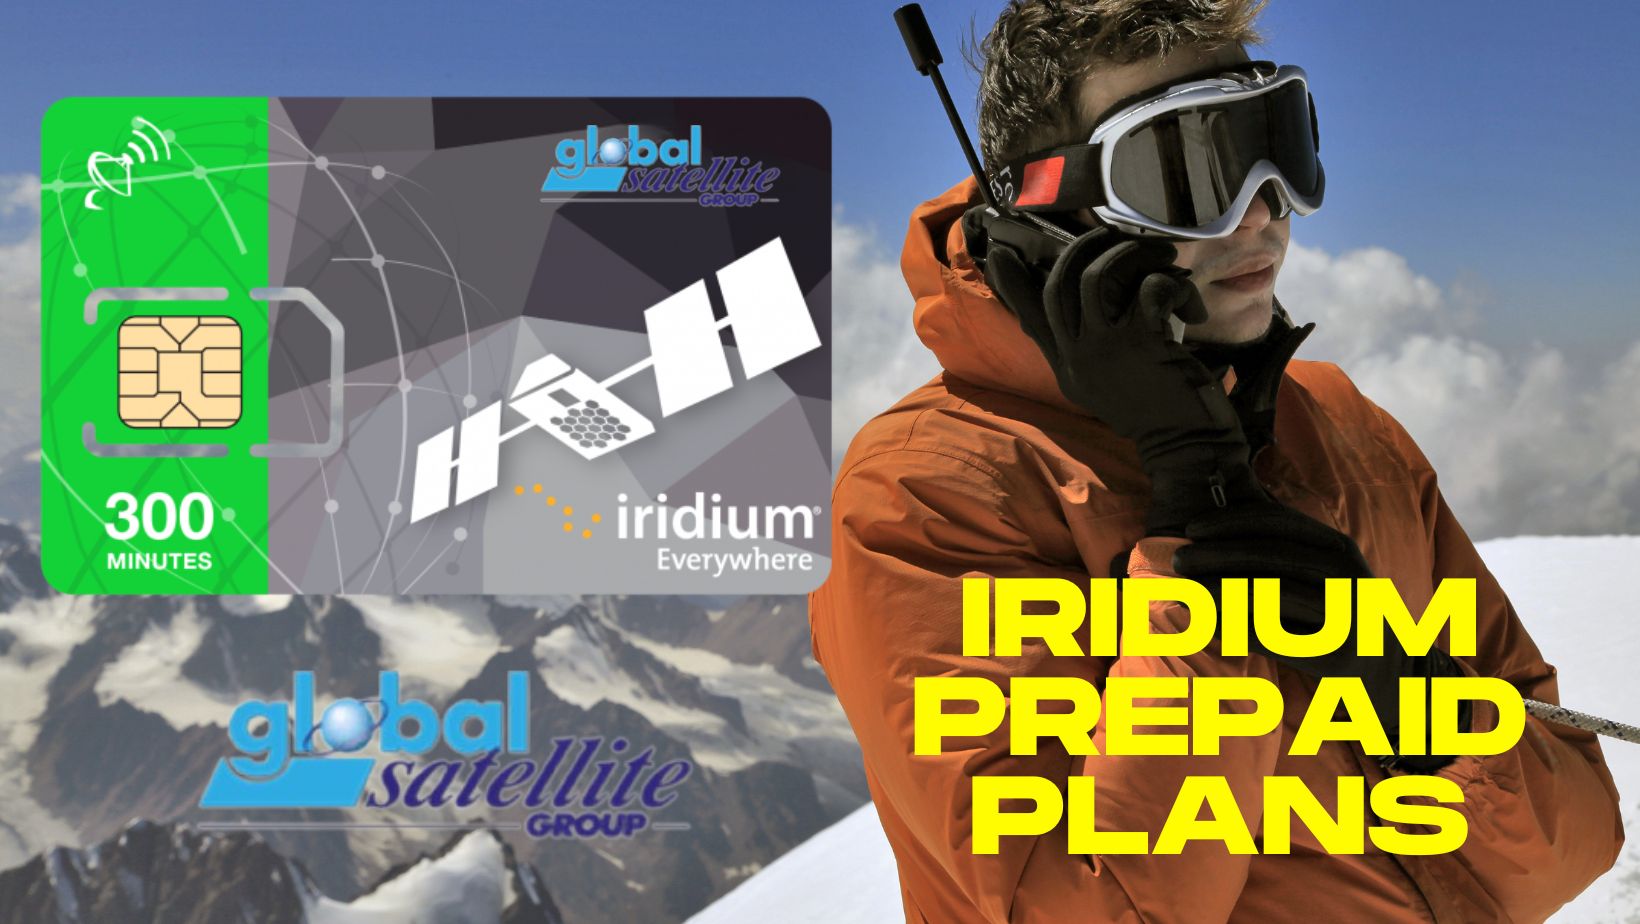 iridium prepaid